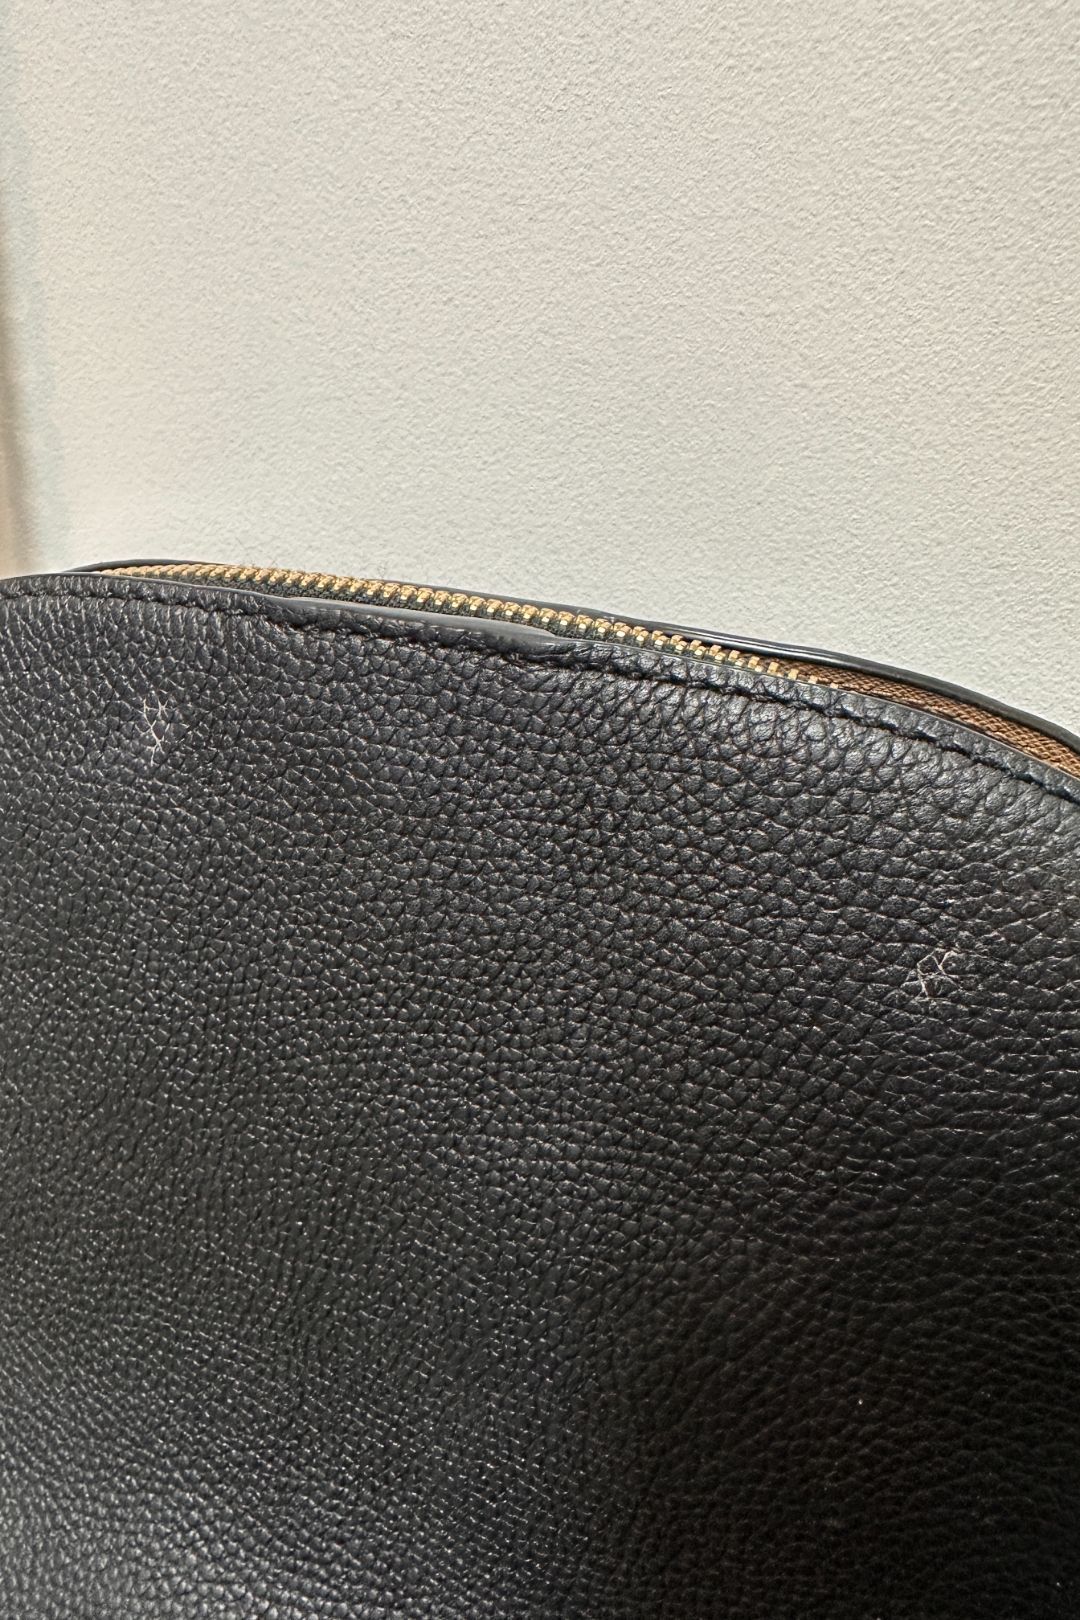 Michael Kors Black Pebbled Leather Crossbody Bag